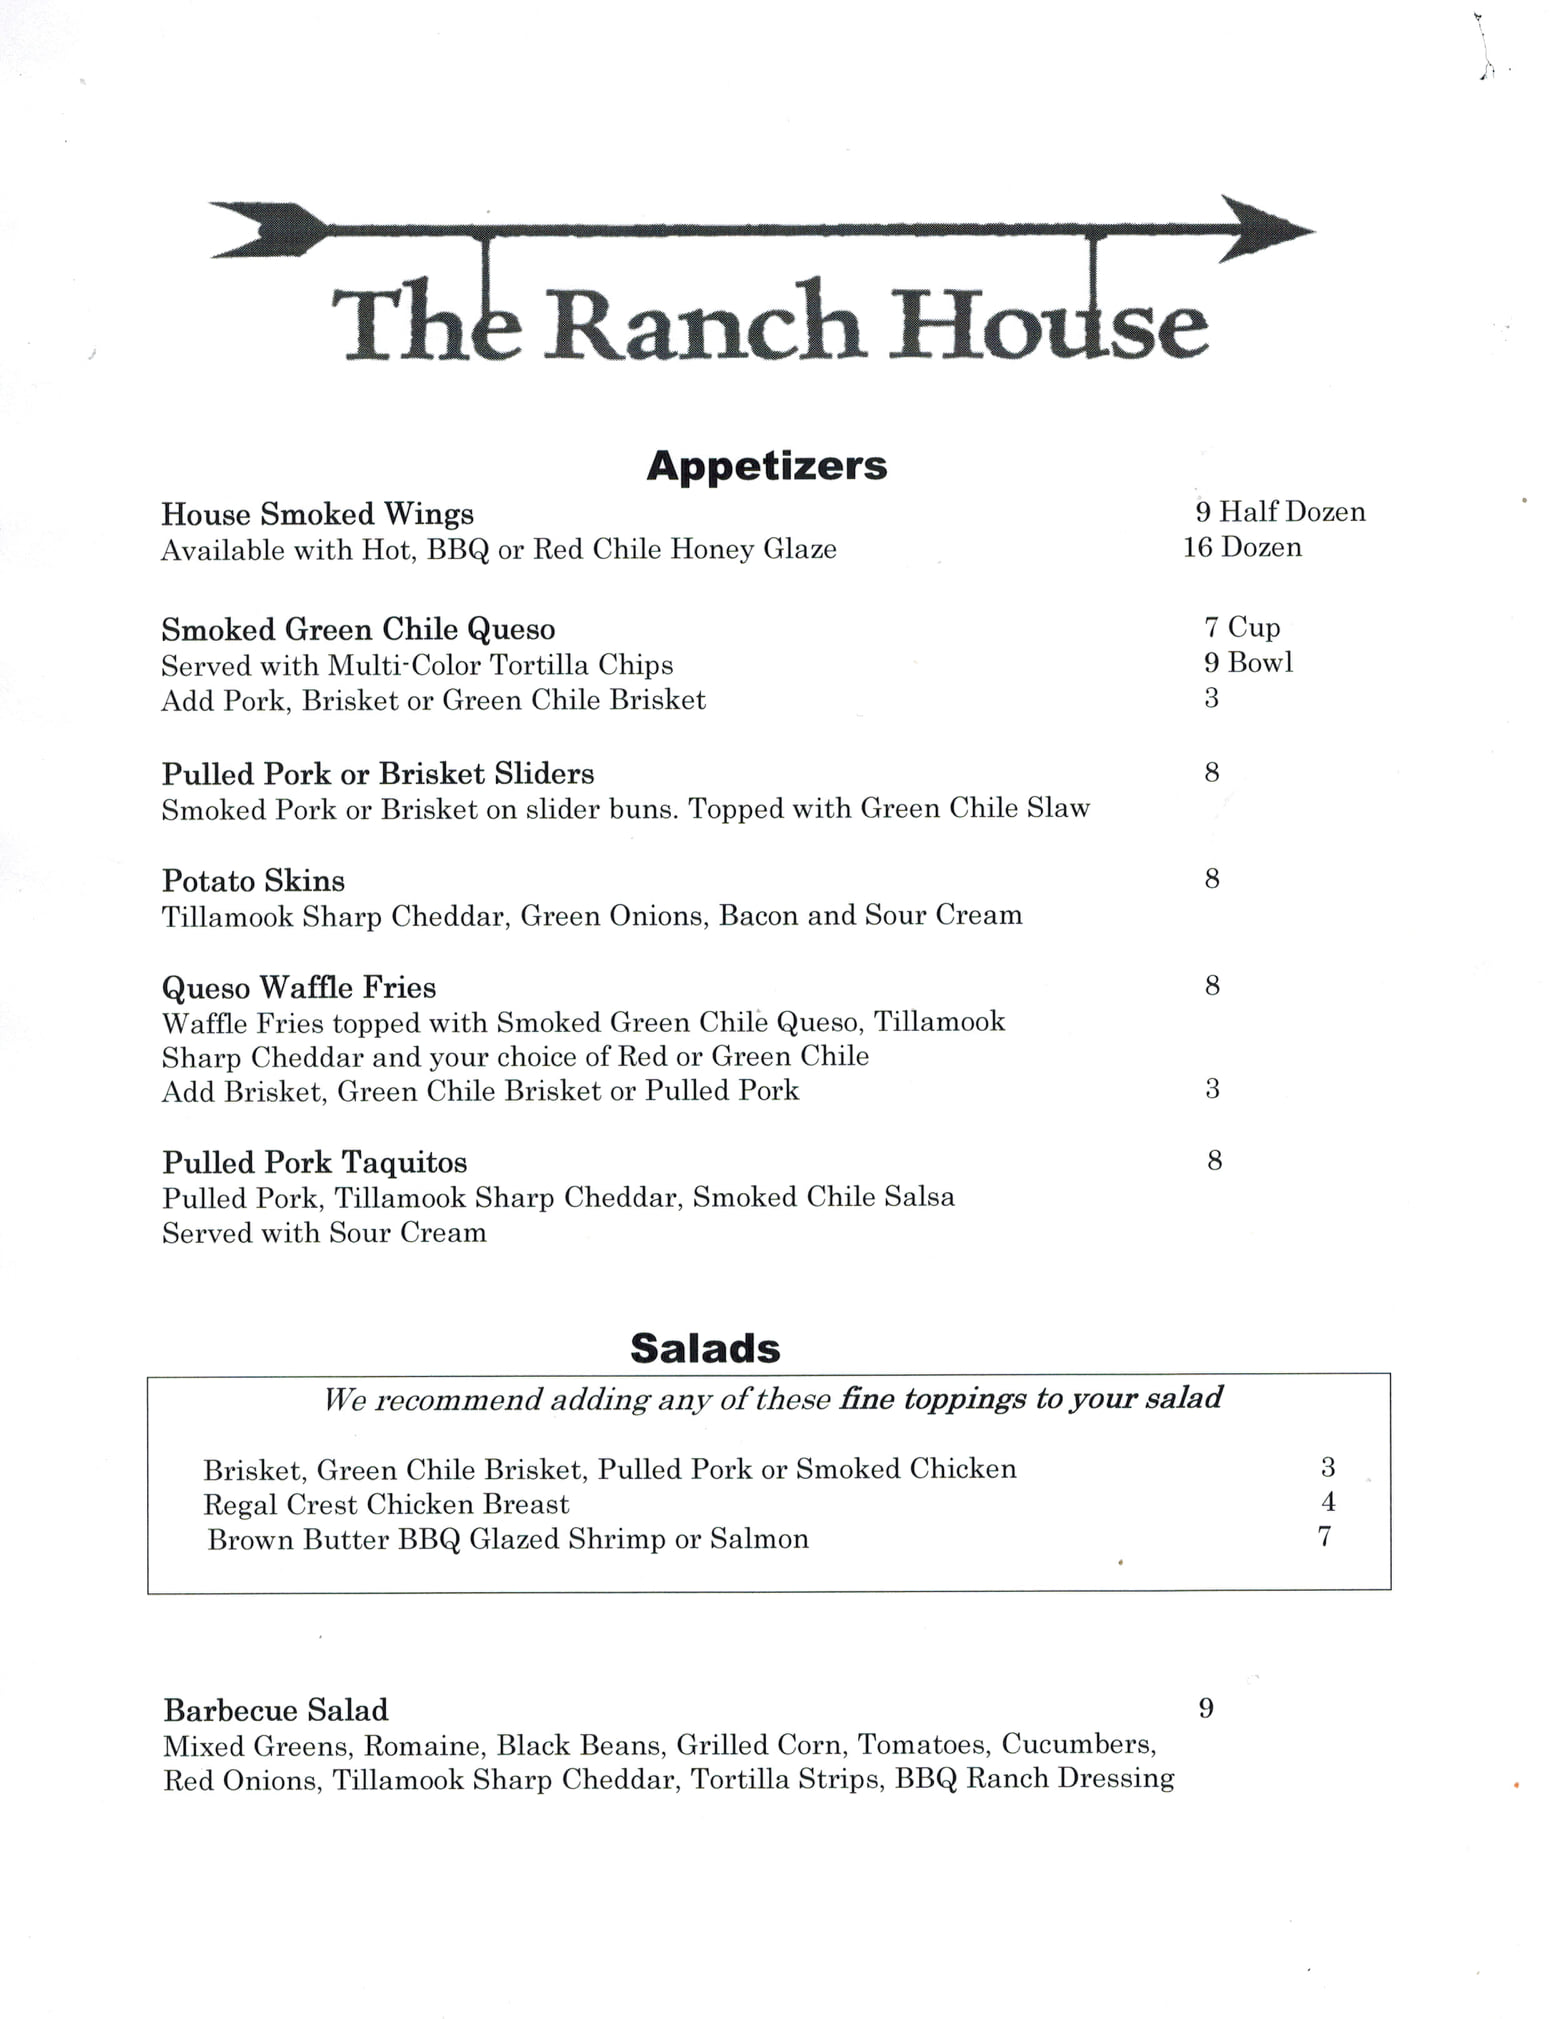 The Ranch House General Menu